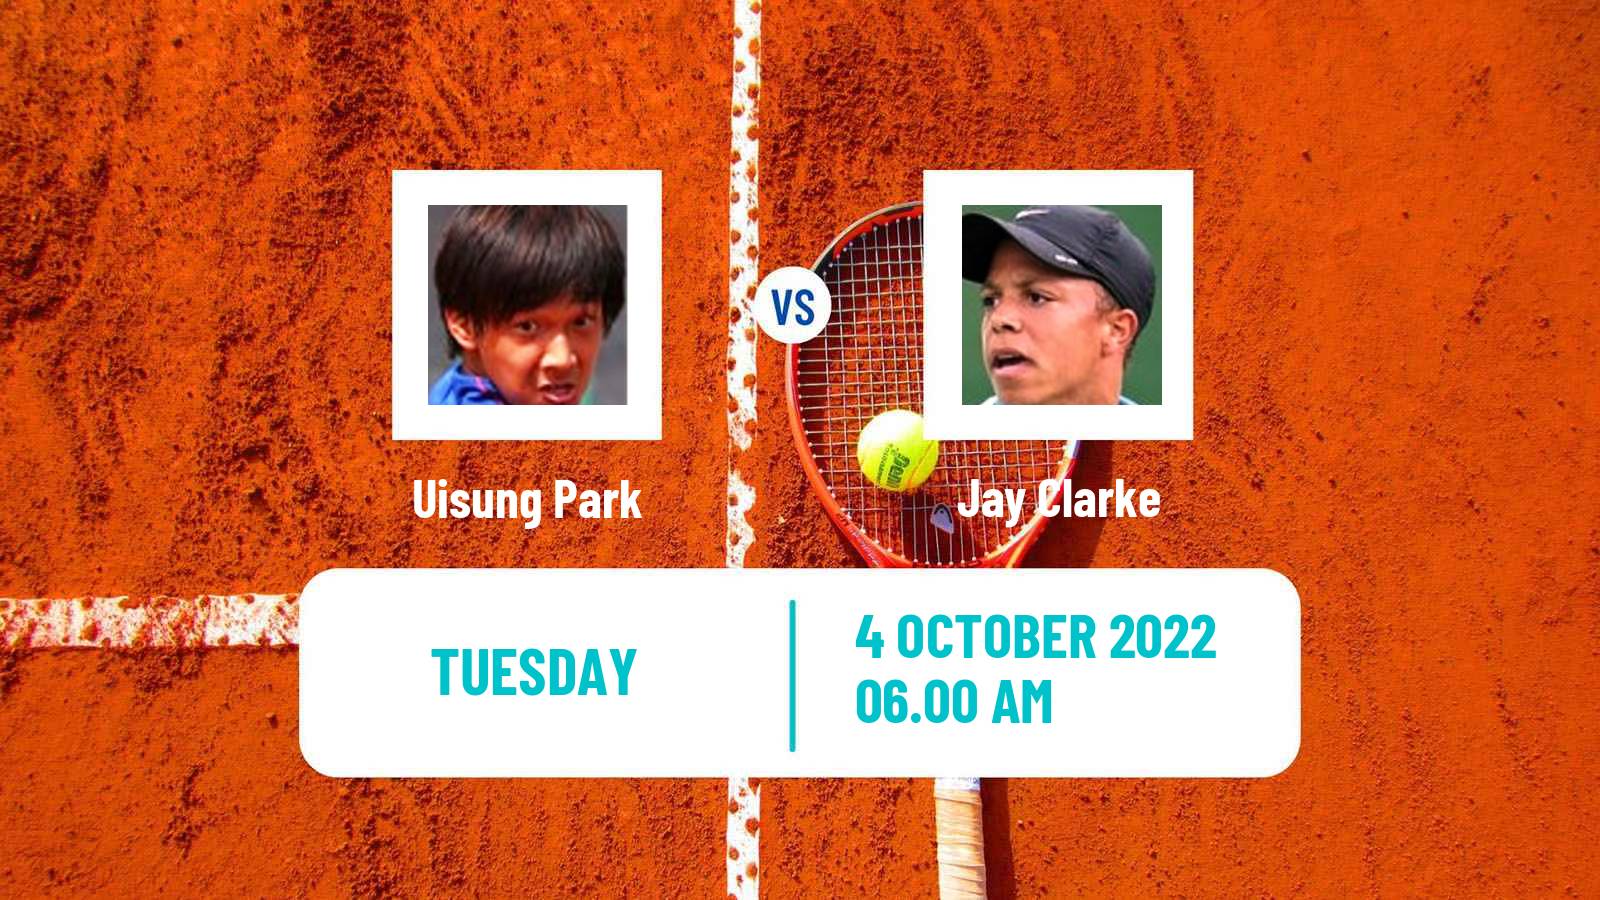 Tennis ATP Challenger Uisung Park - Jay Clarke